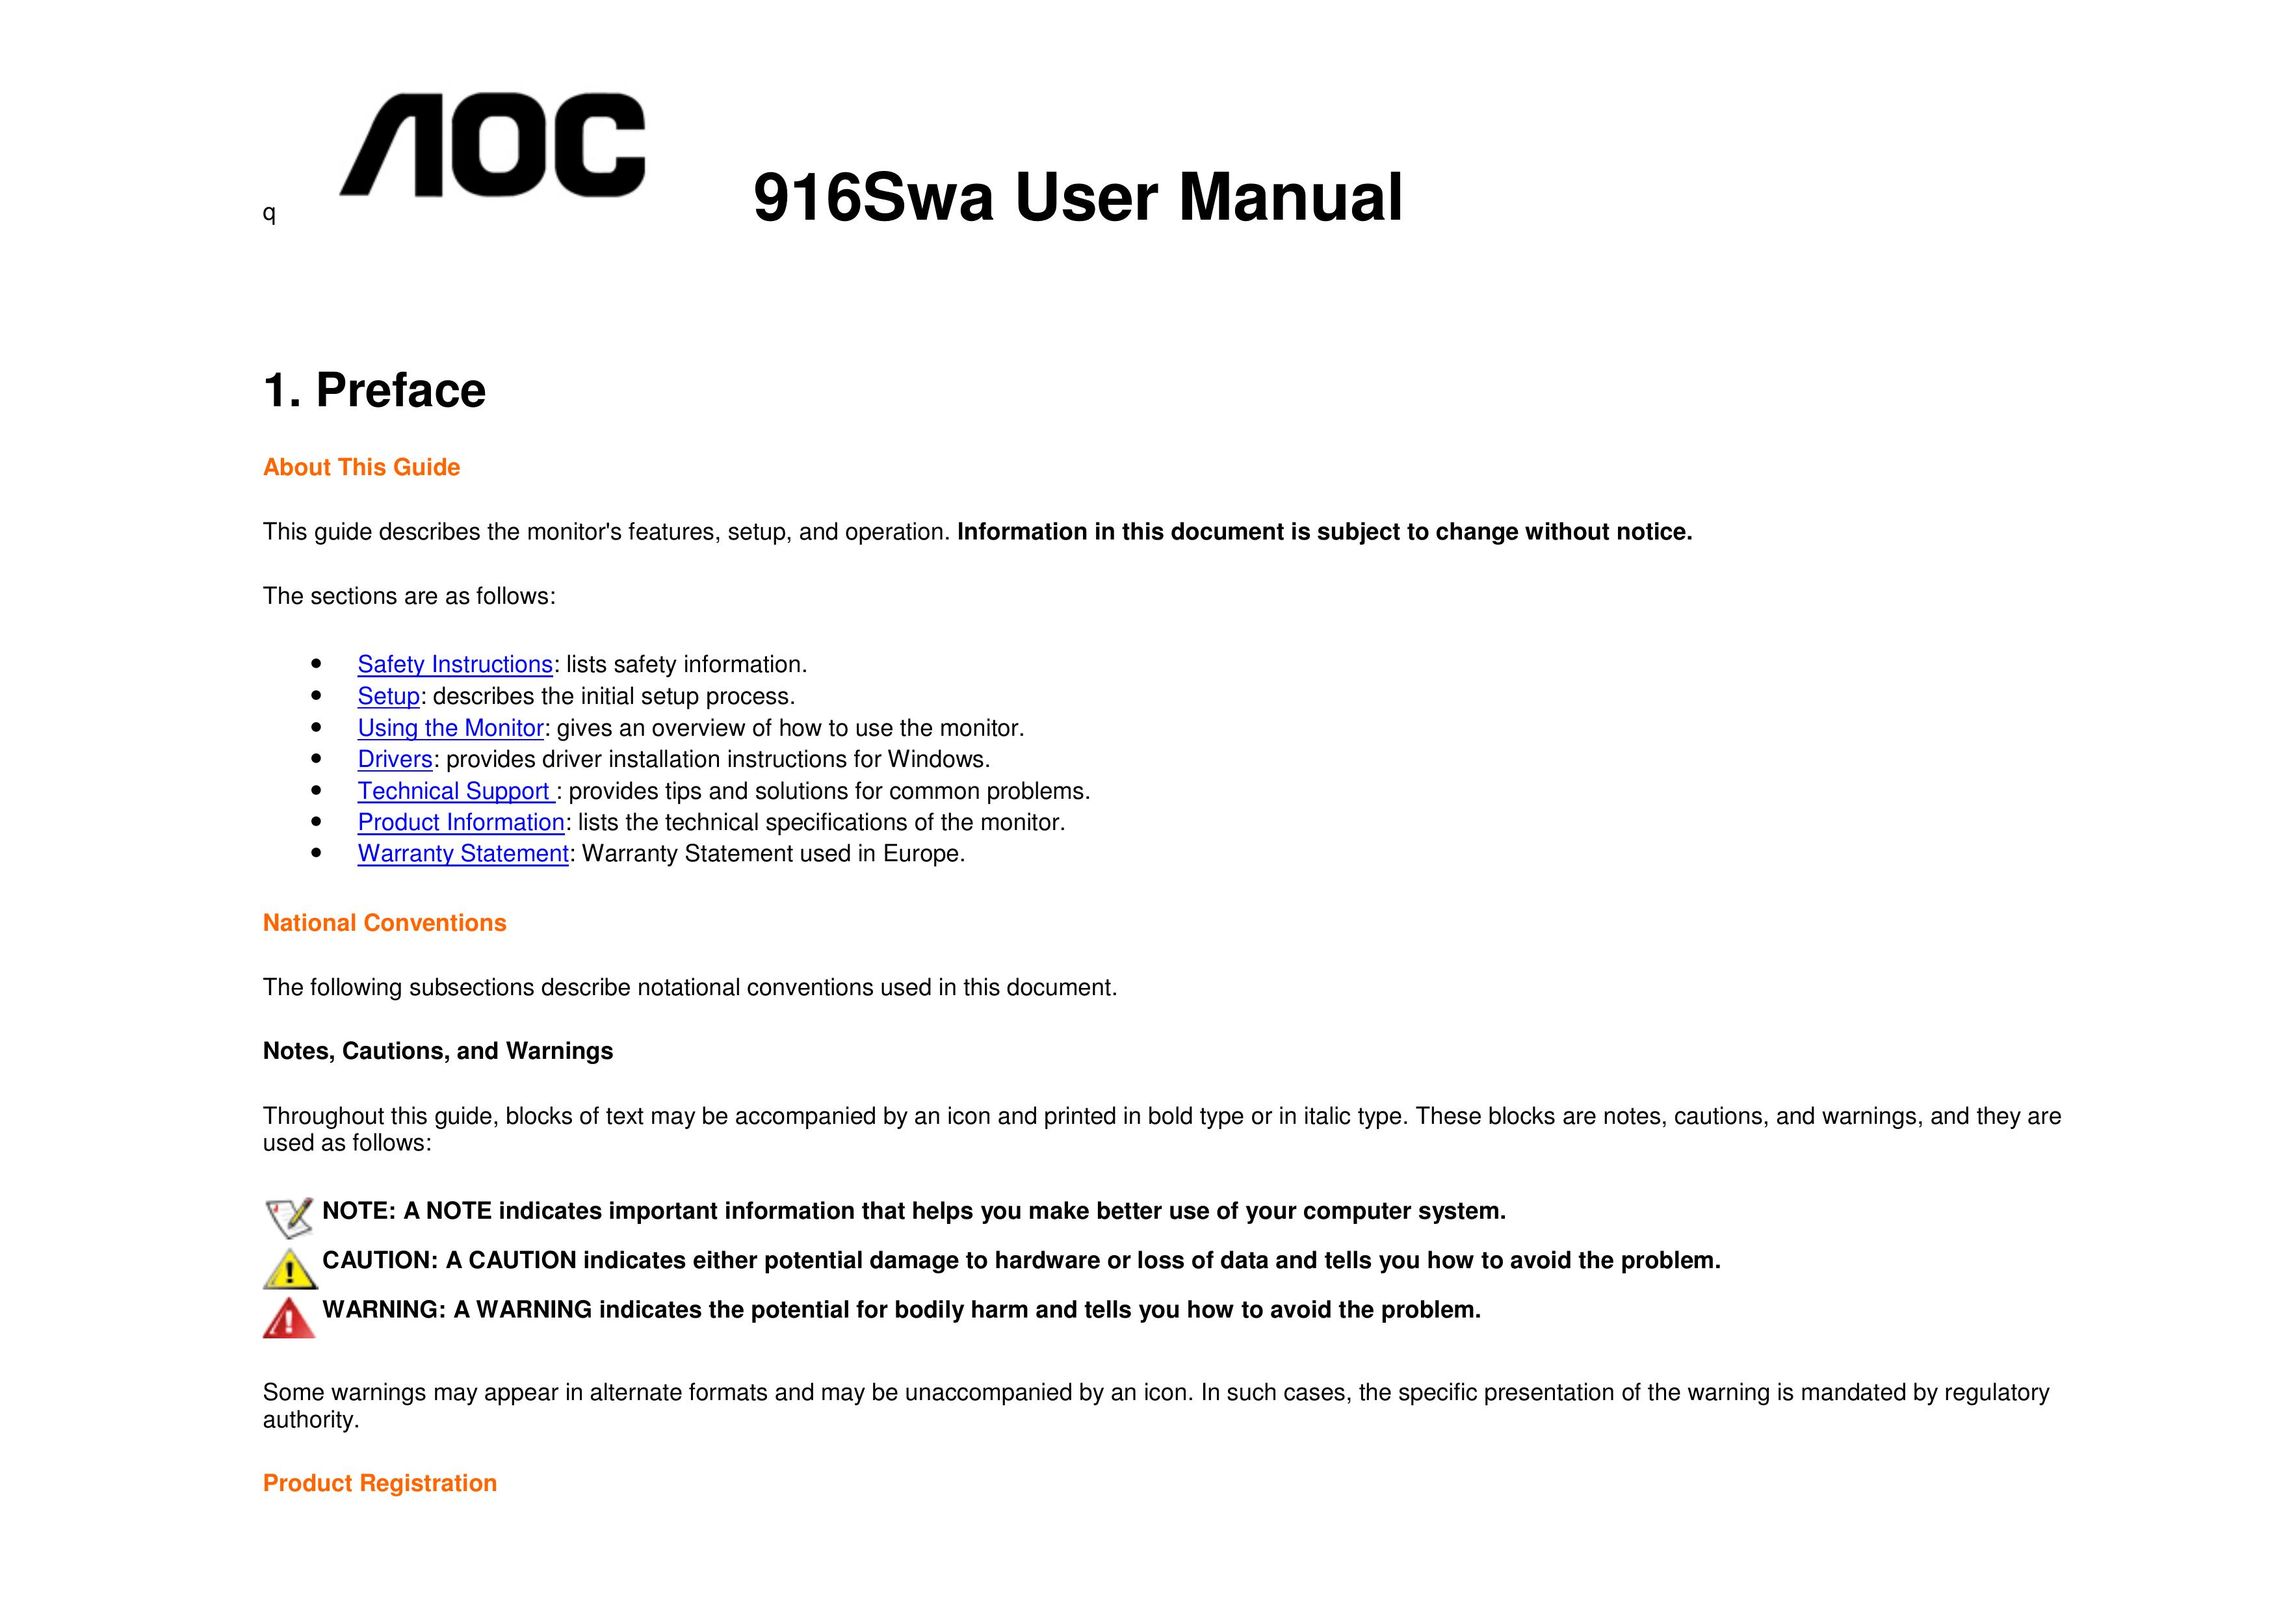 AOC 916Swa Car Video System User Manual